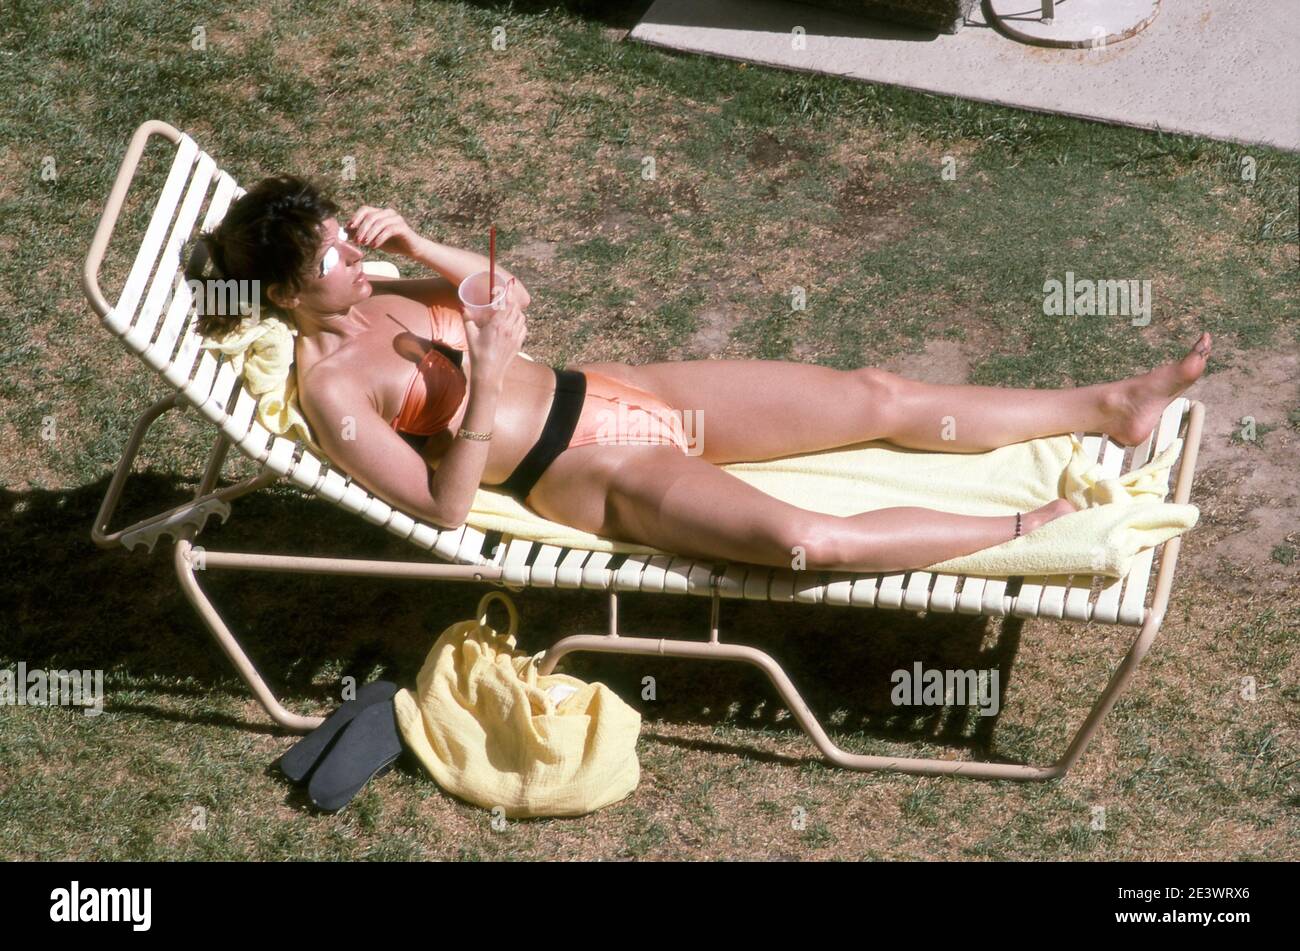 Woman sunbathing on lawn near the pool at the Riviera Hotel in Las Vegas, Nevada circa 1990. Stock Photo